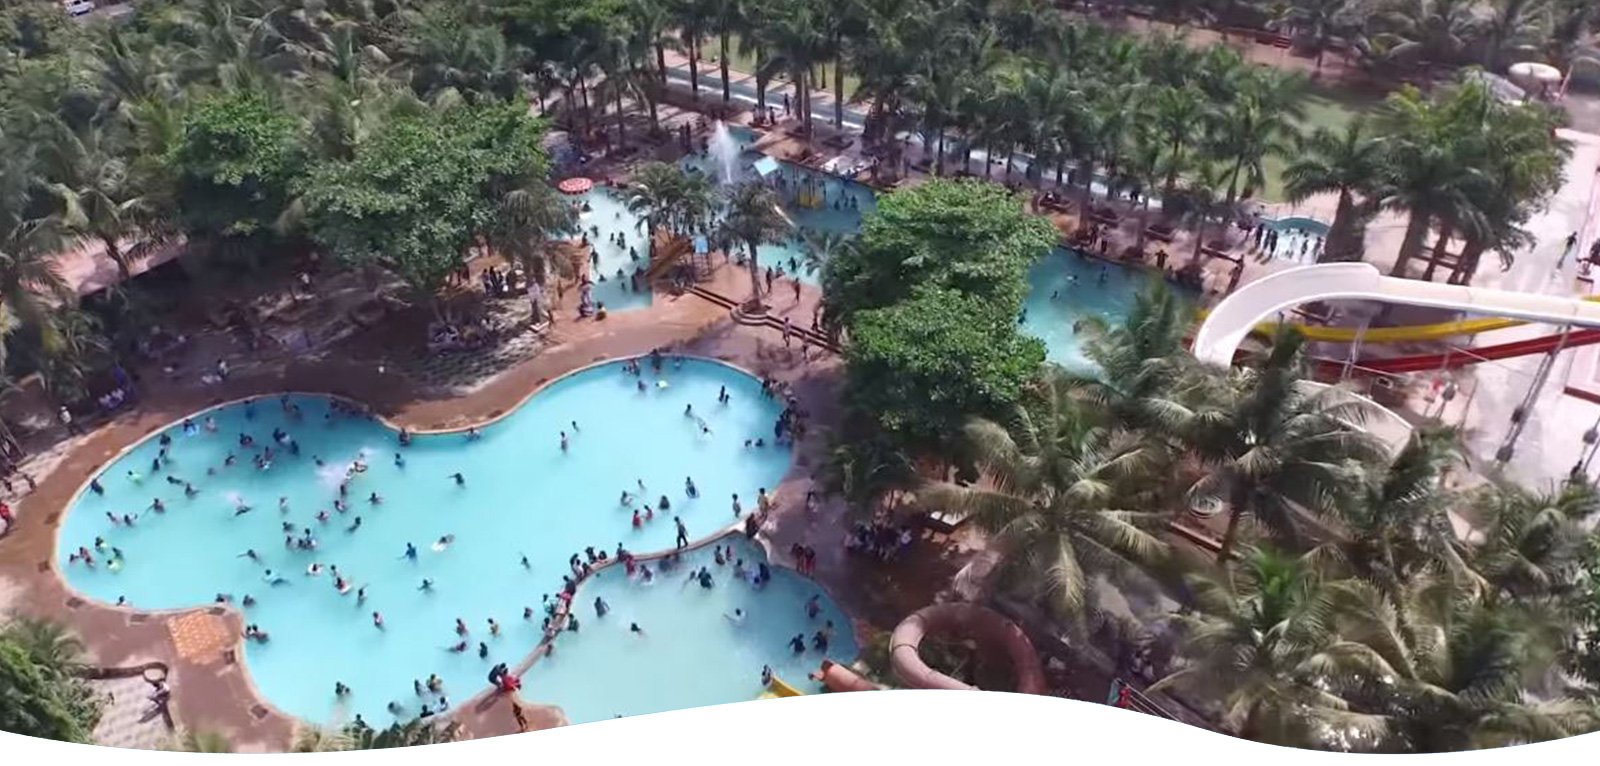 anand-sagar-resort-water-park-mumbai